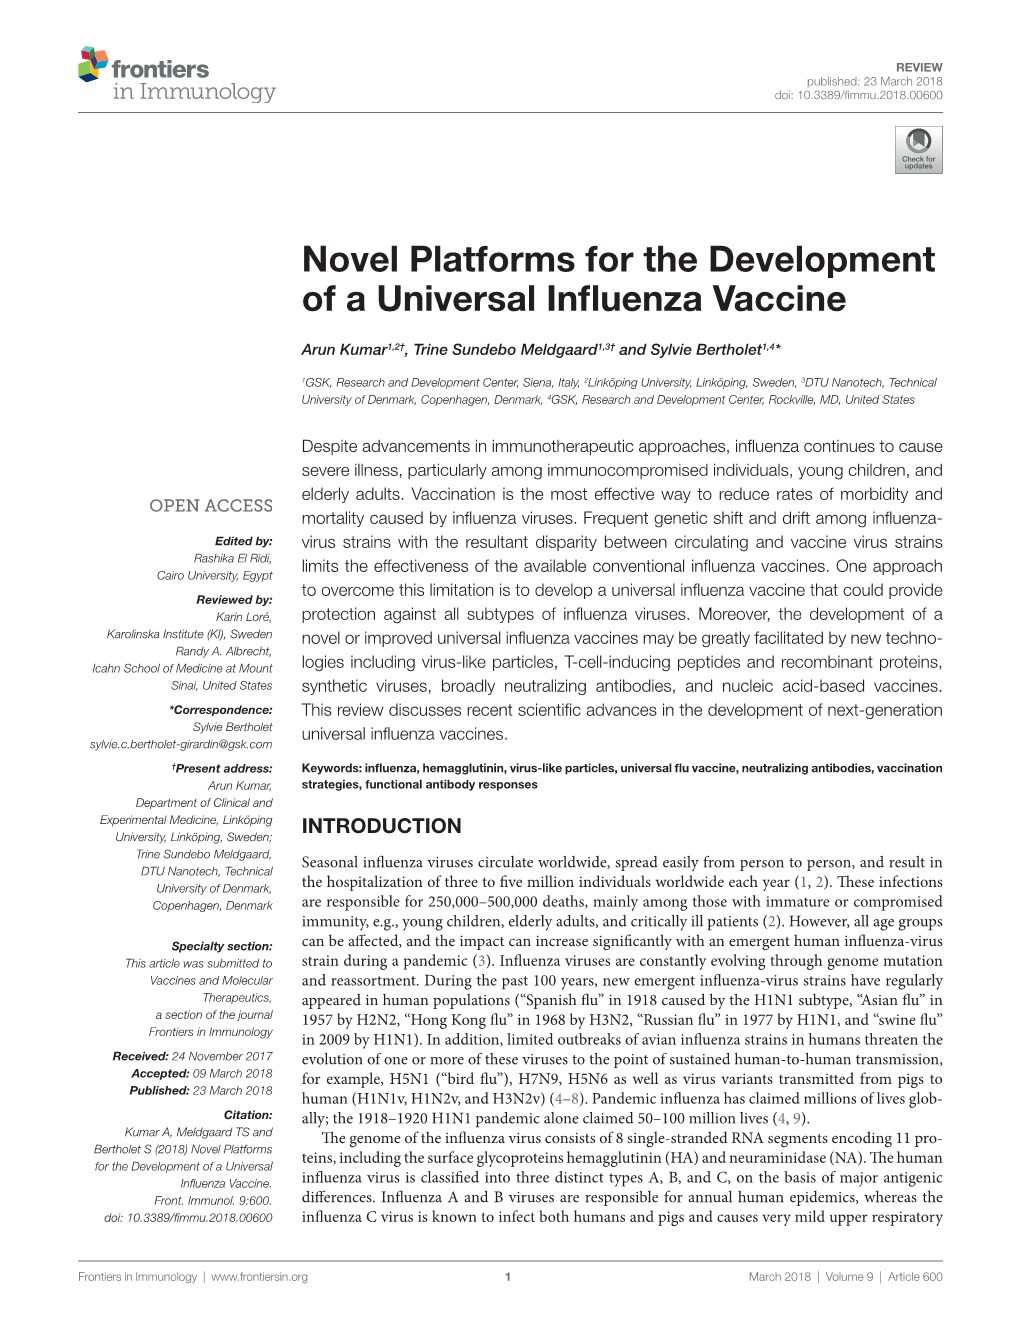 Novel Platforms for the Development of a Universal Influenza Vaccine